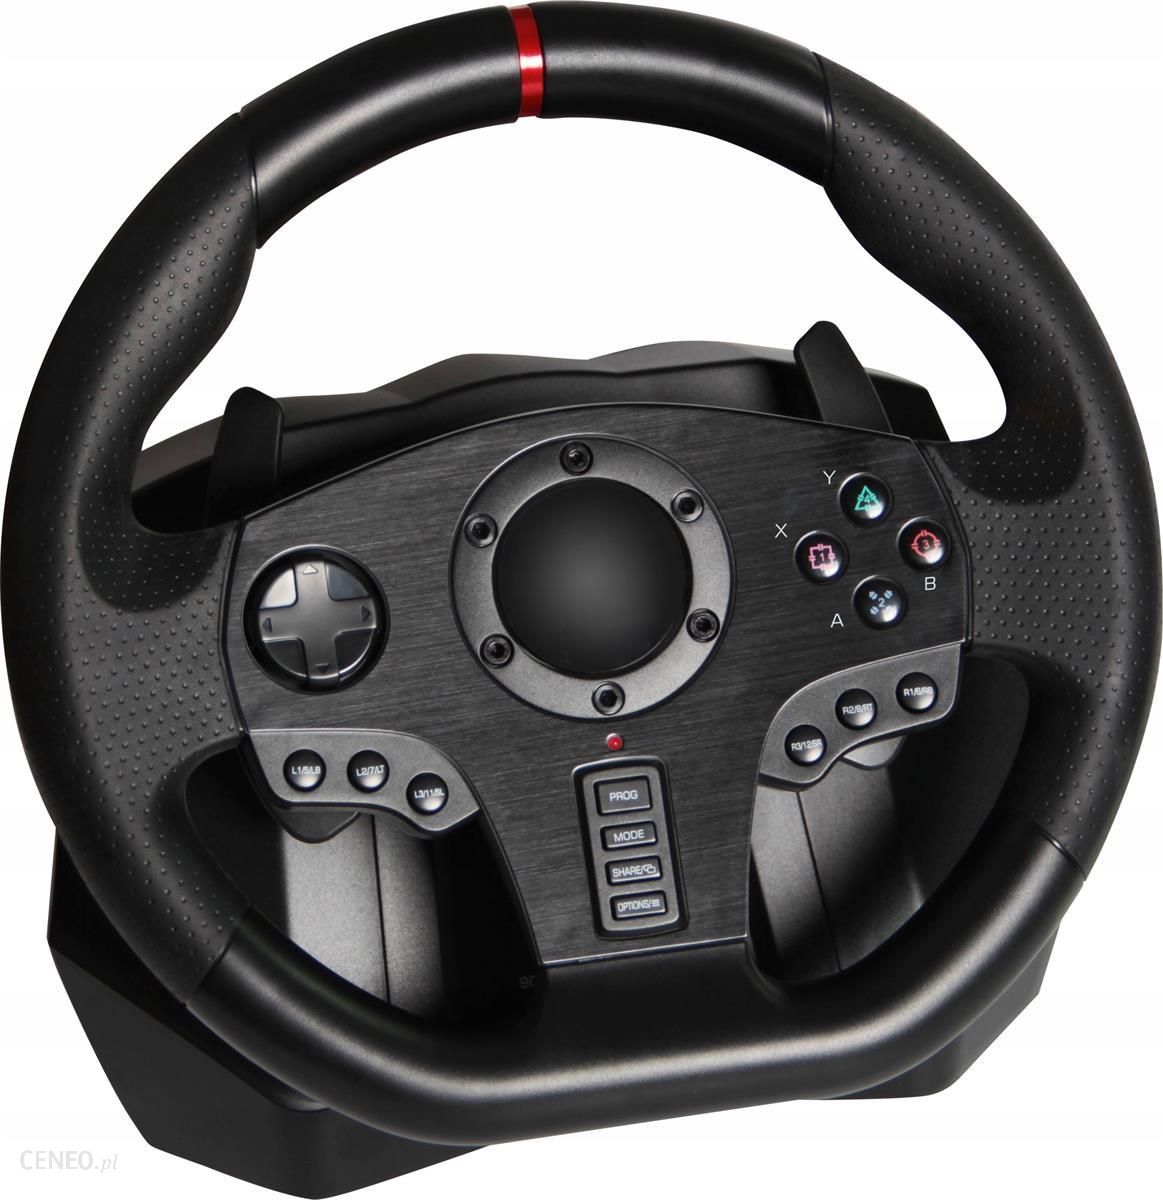 Cobra Rally GT900 PC/PS3/PS4/Xbox 360/Xbox One/Switch 